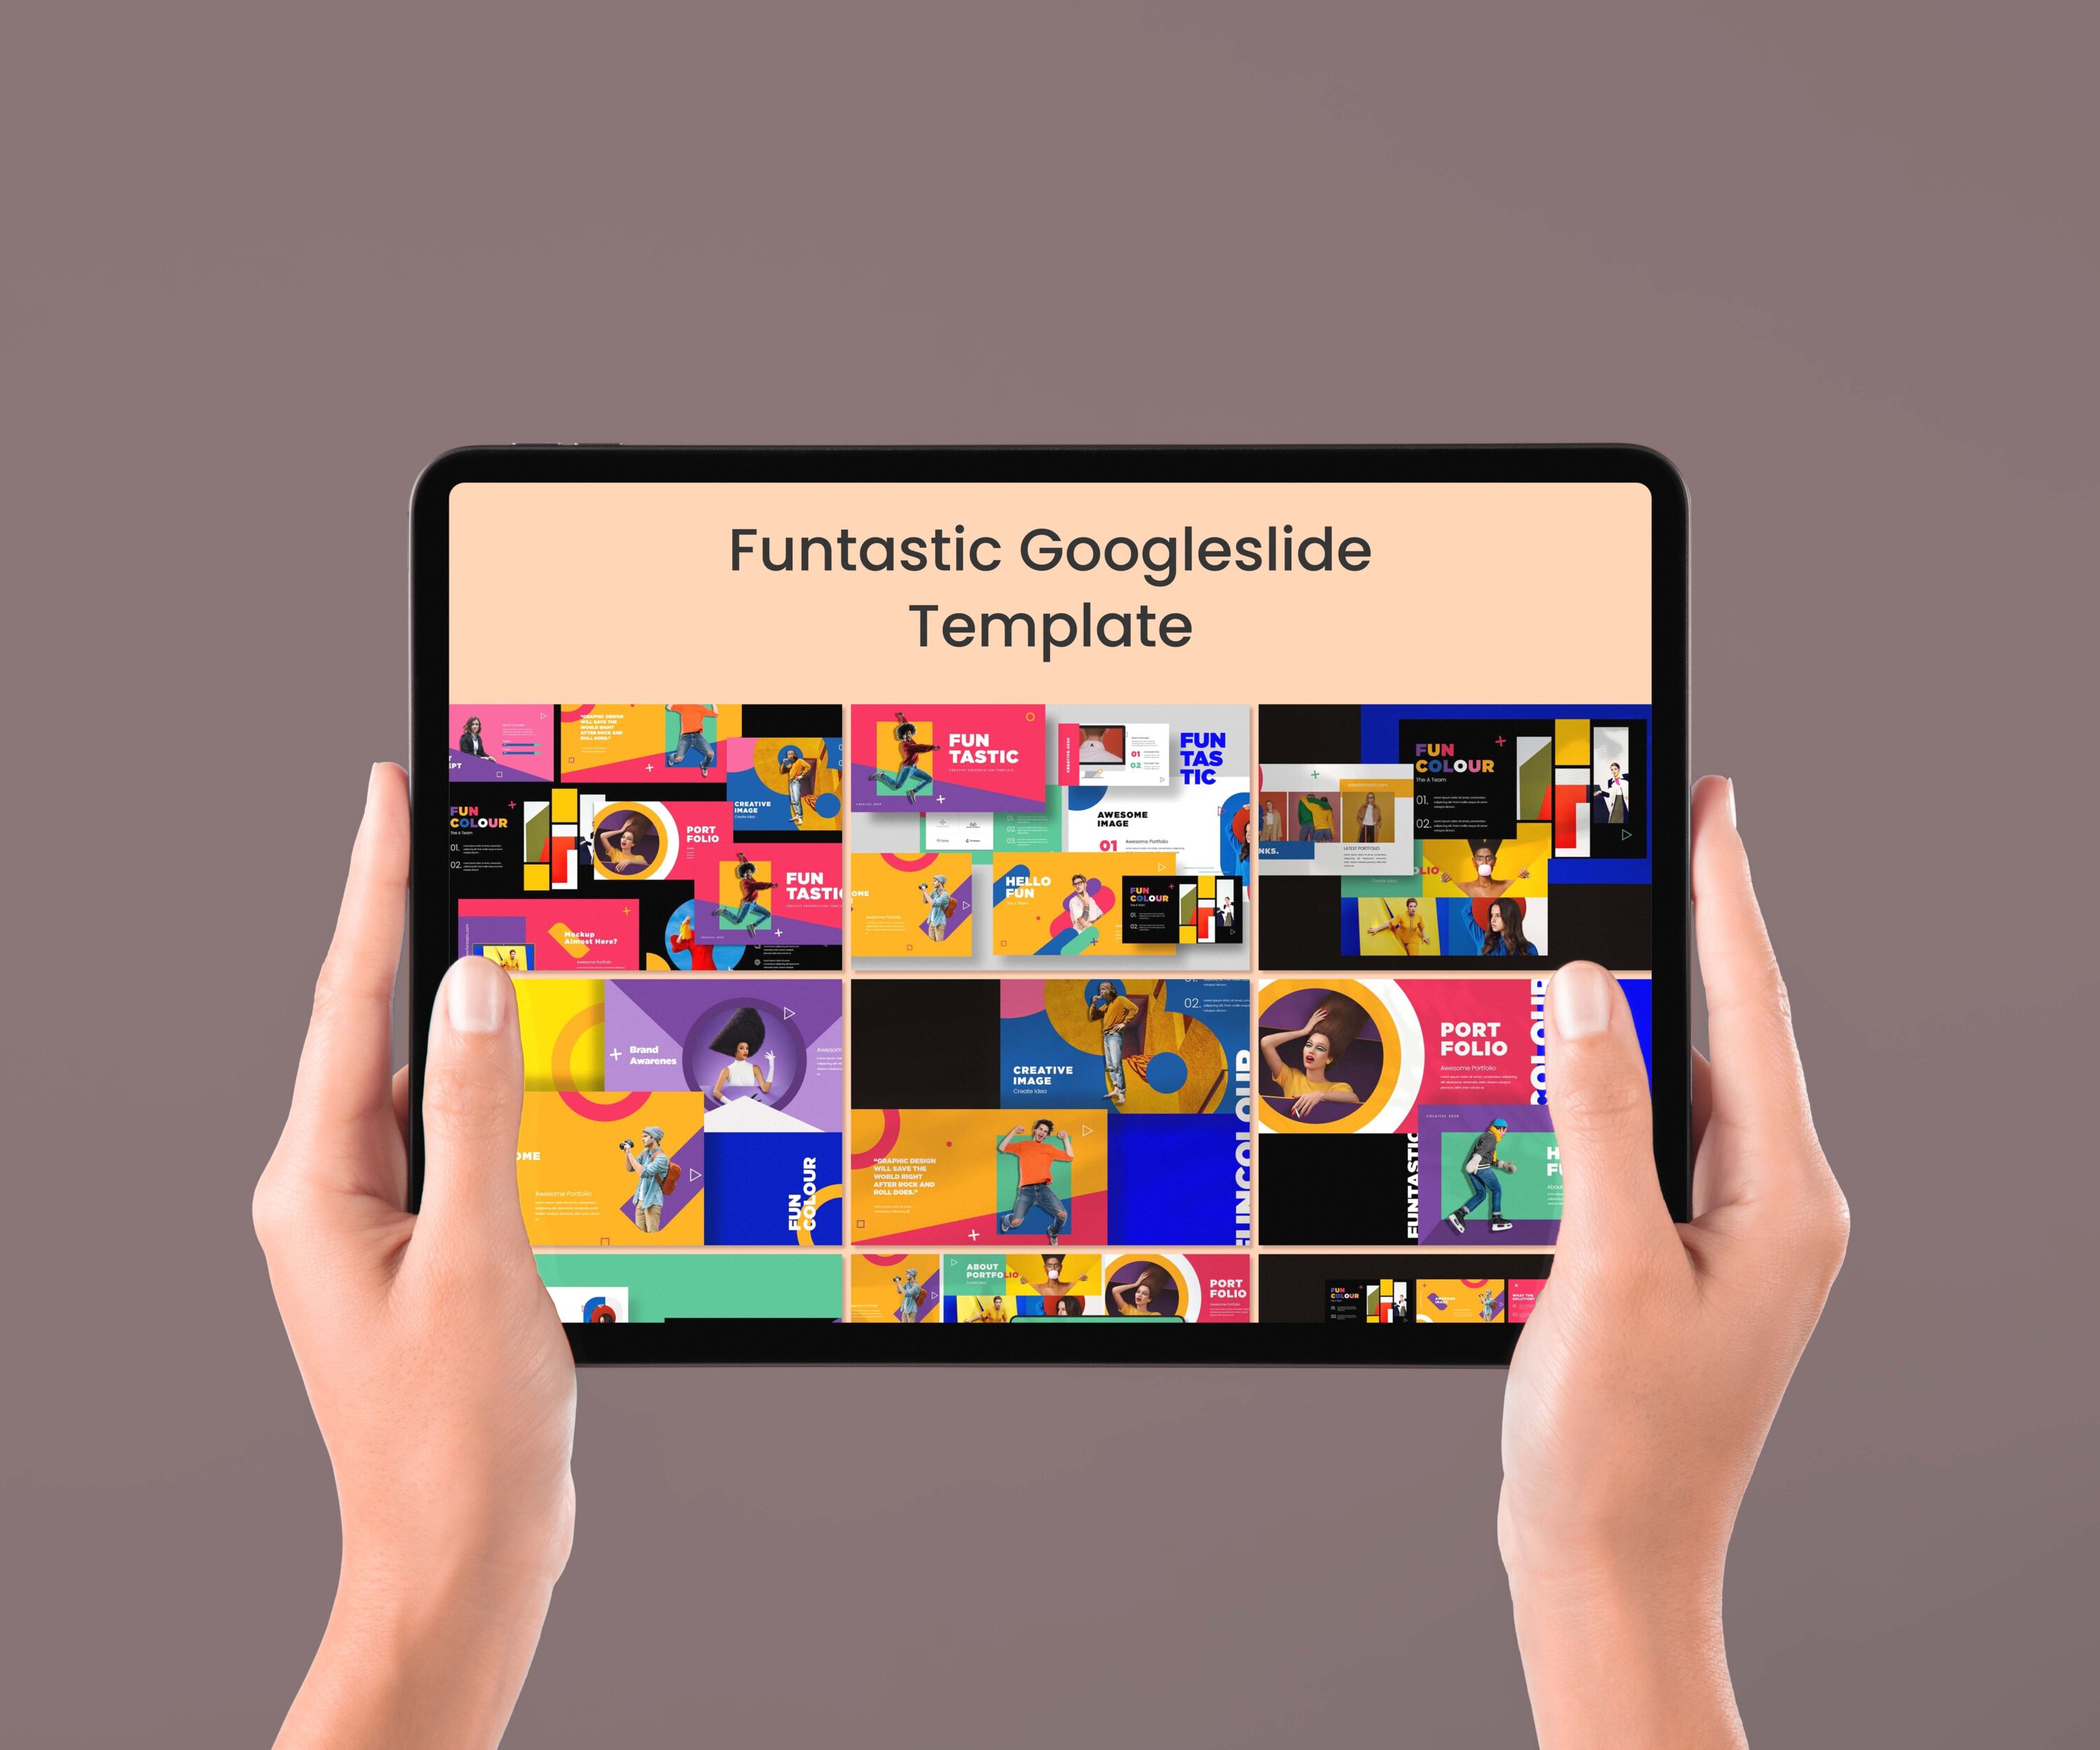 Funtastic Googleslide Template - tablet preview.